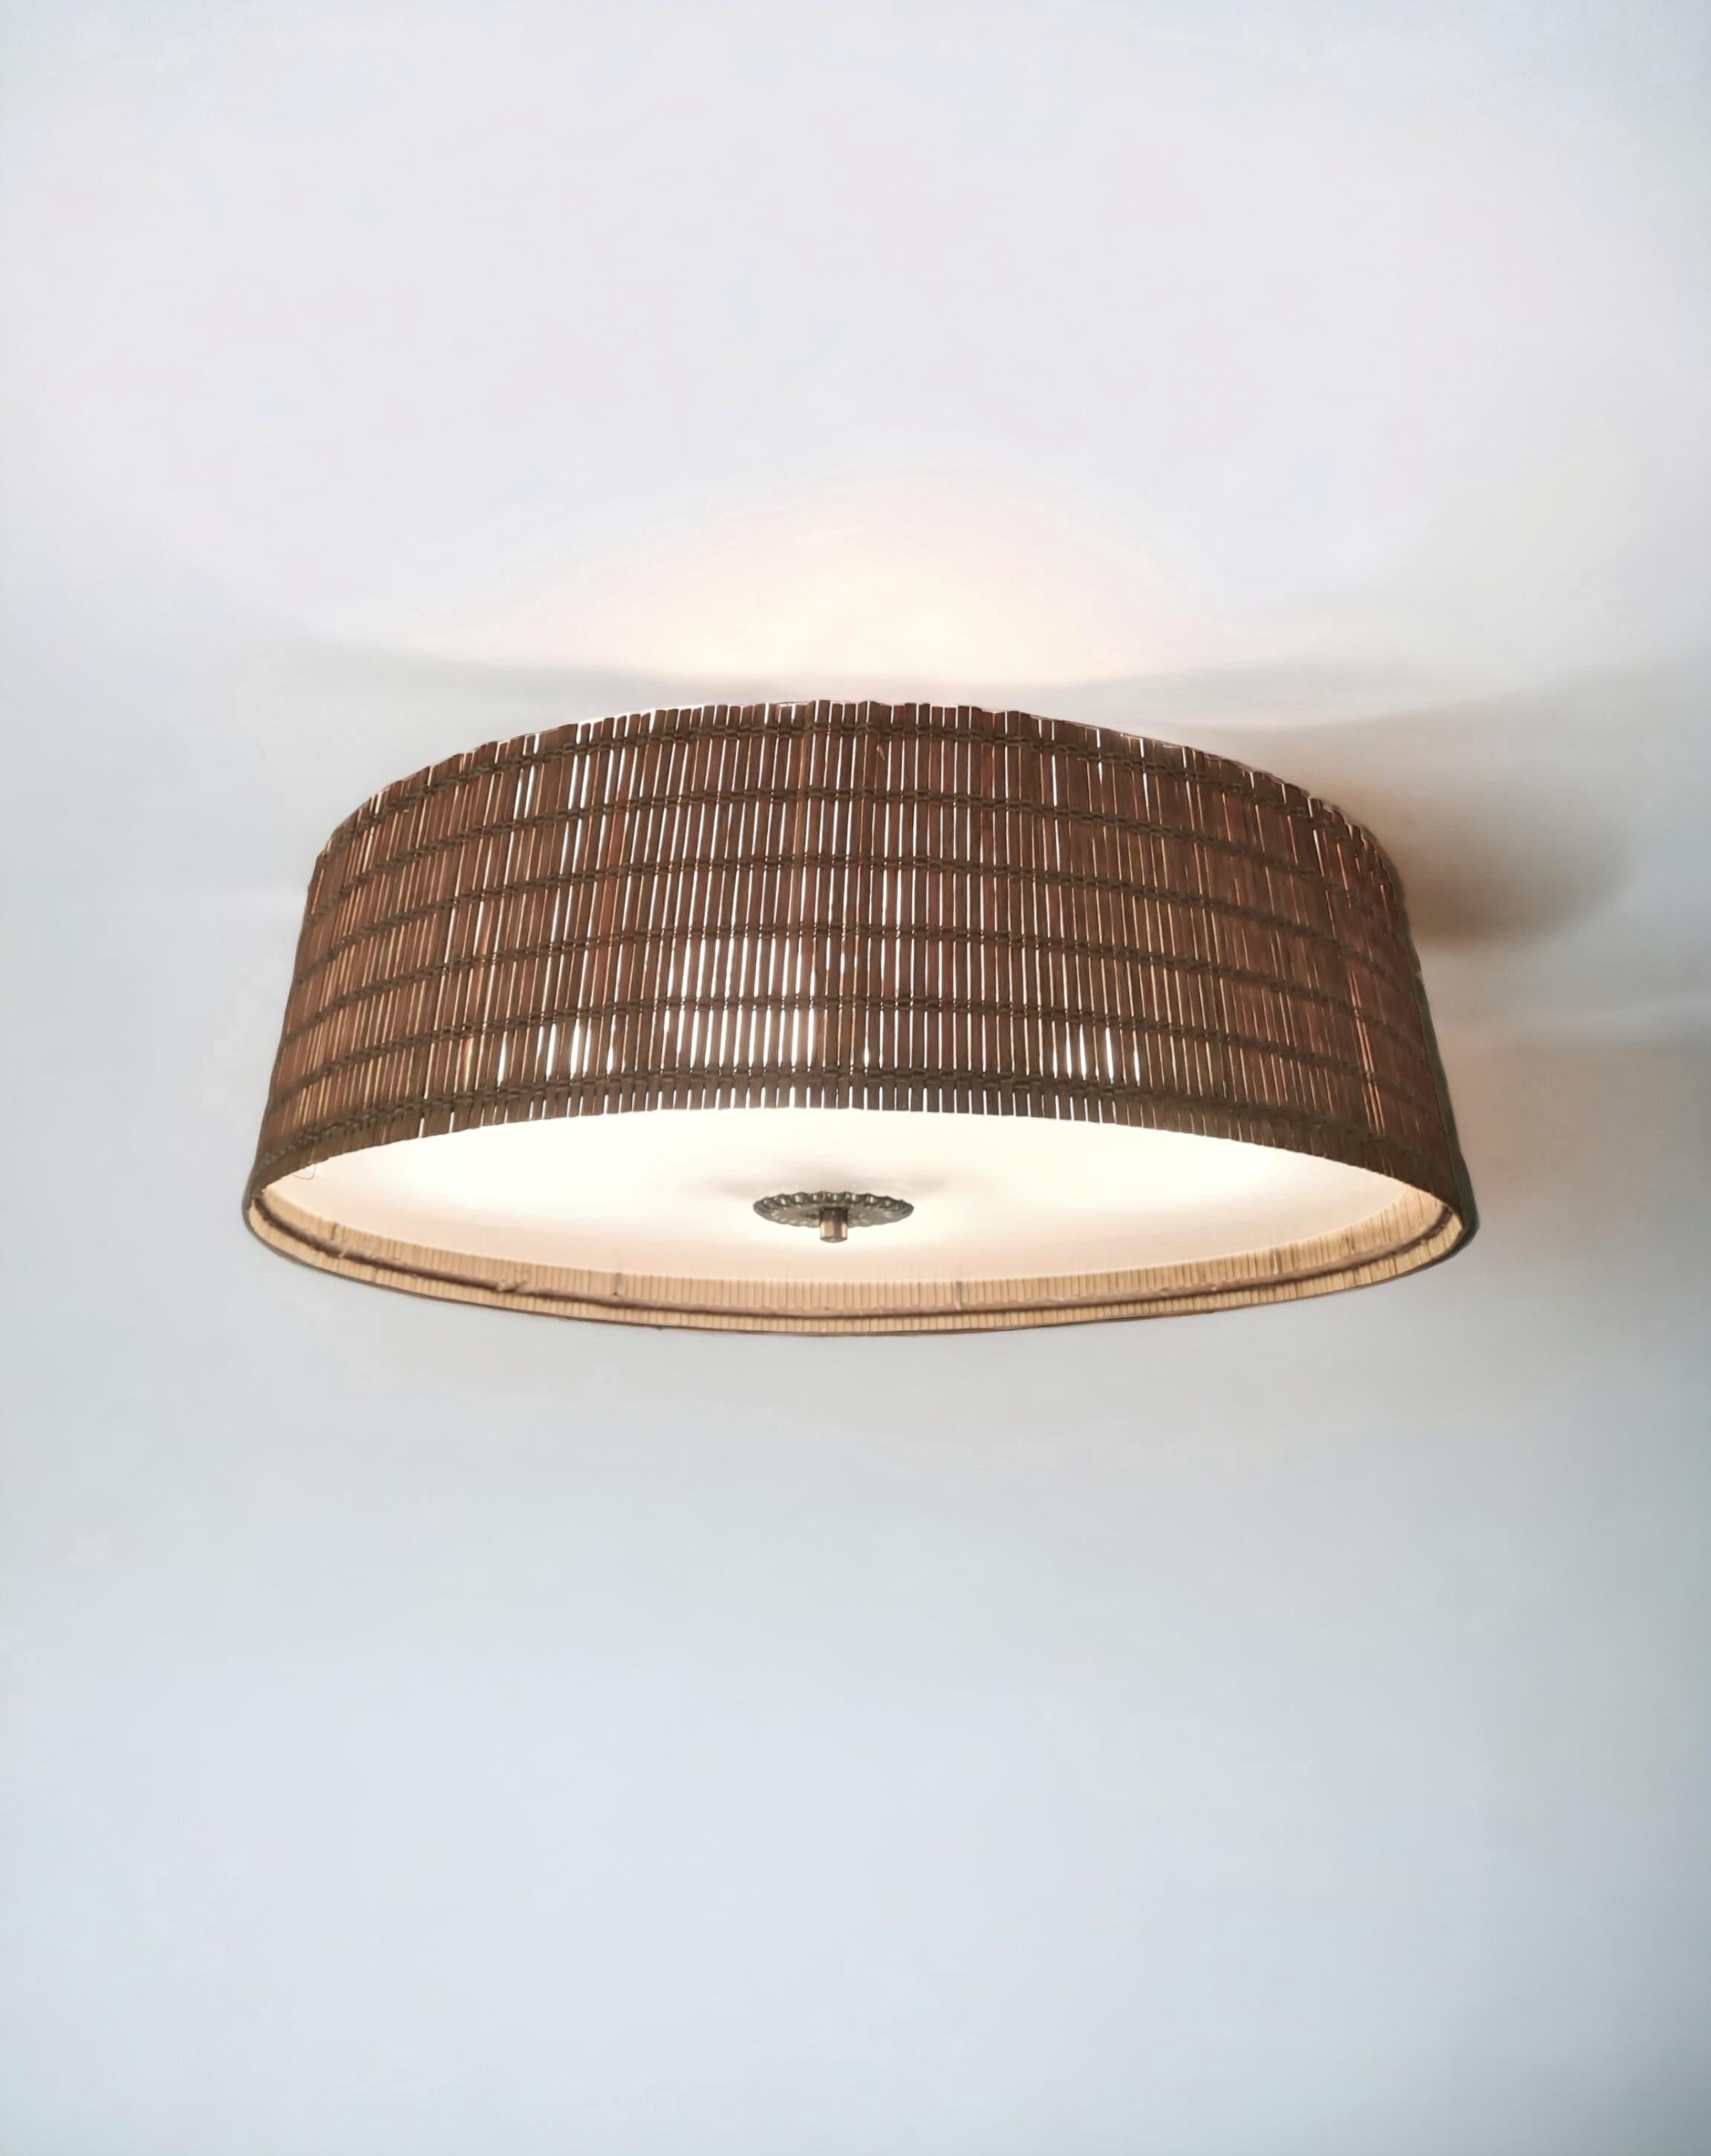 Gunnel Nyman Ceiling Lamp Model 20491 for Idman For Sale 8